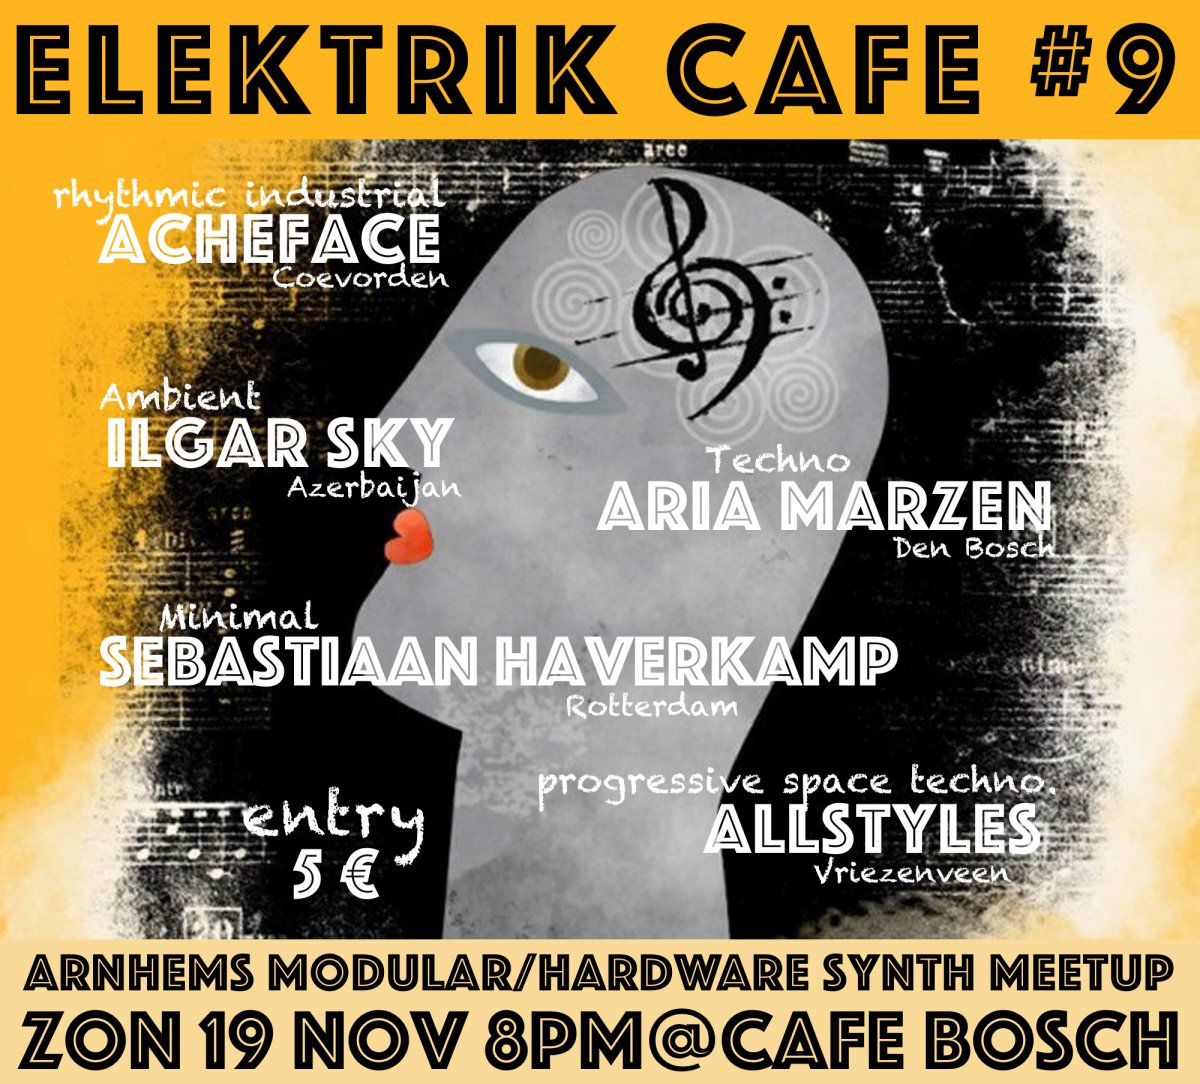 elektrik cafe 9 poster.jpg